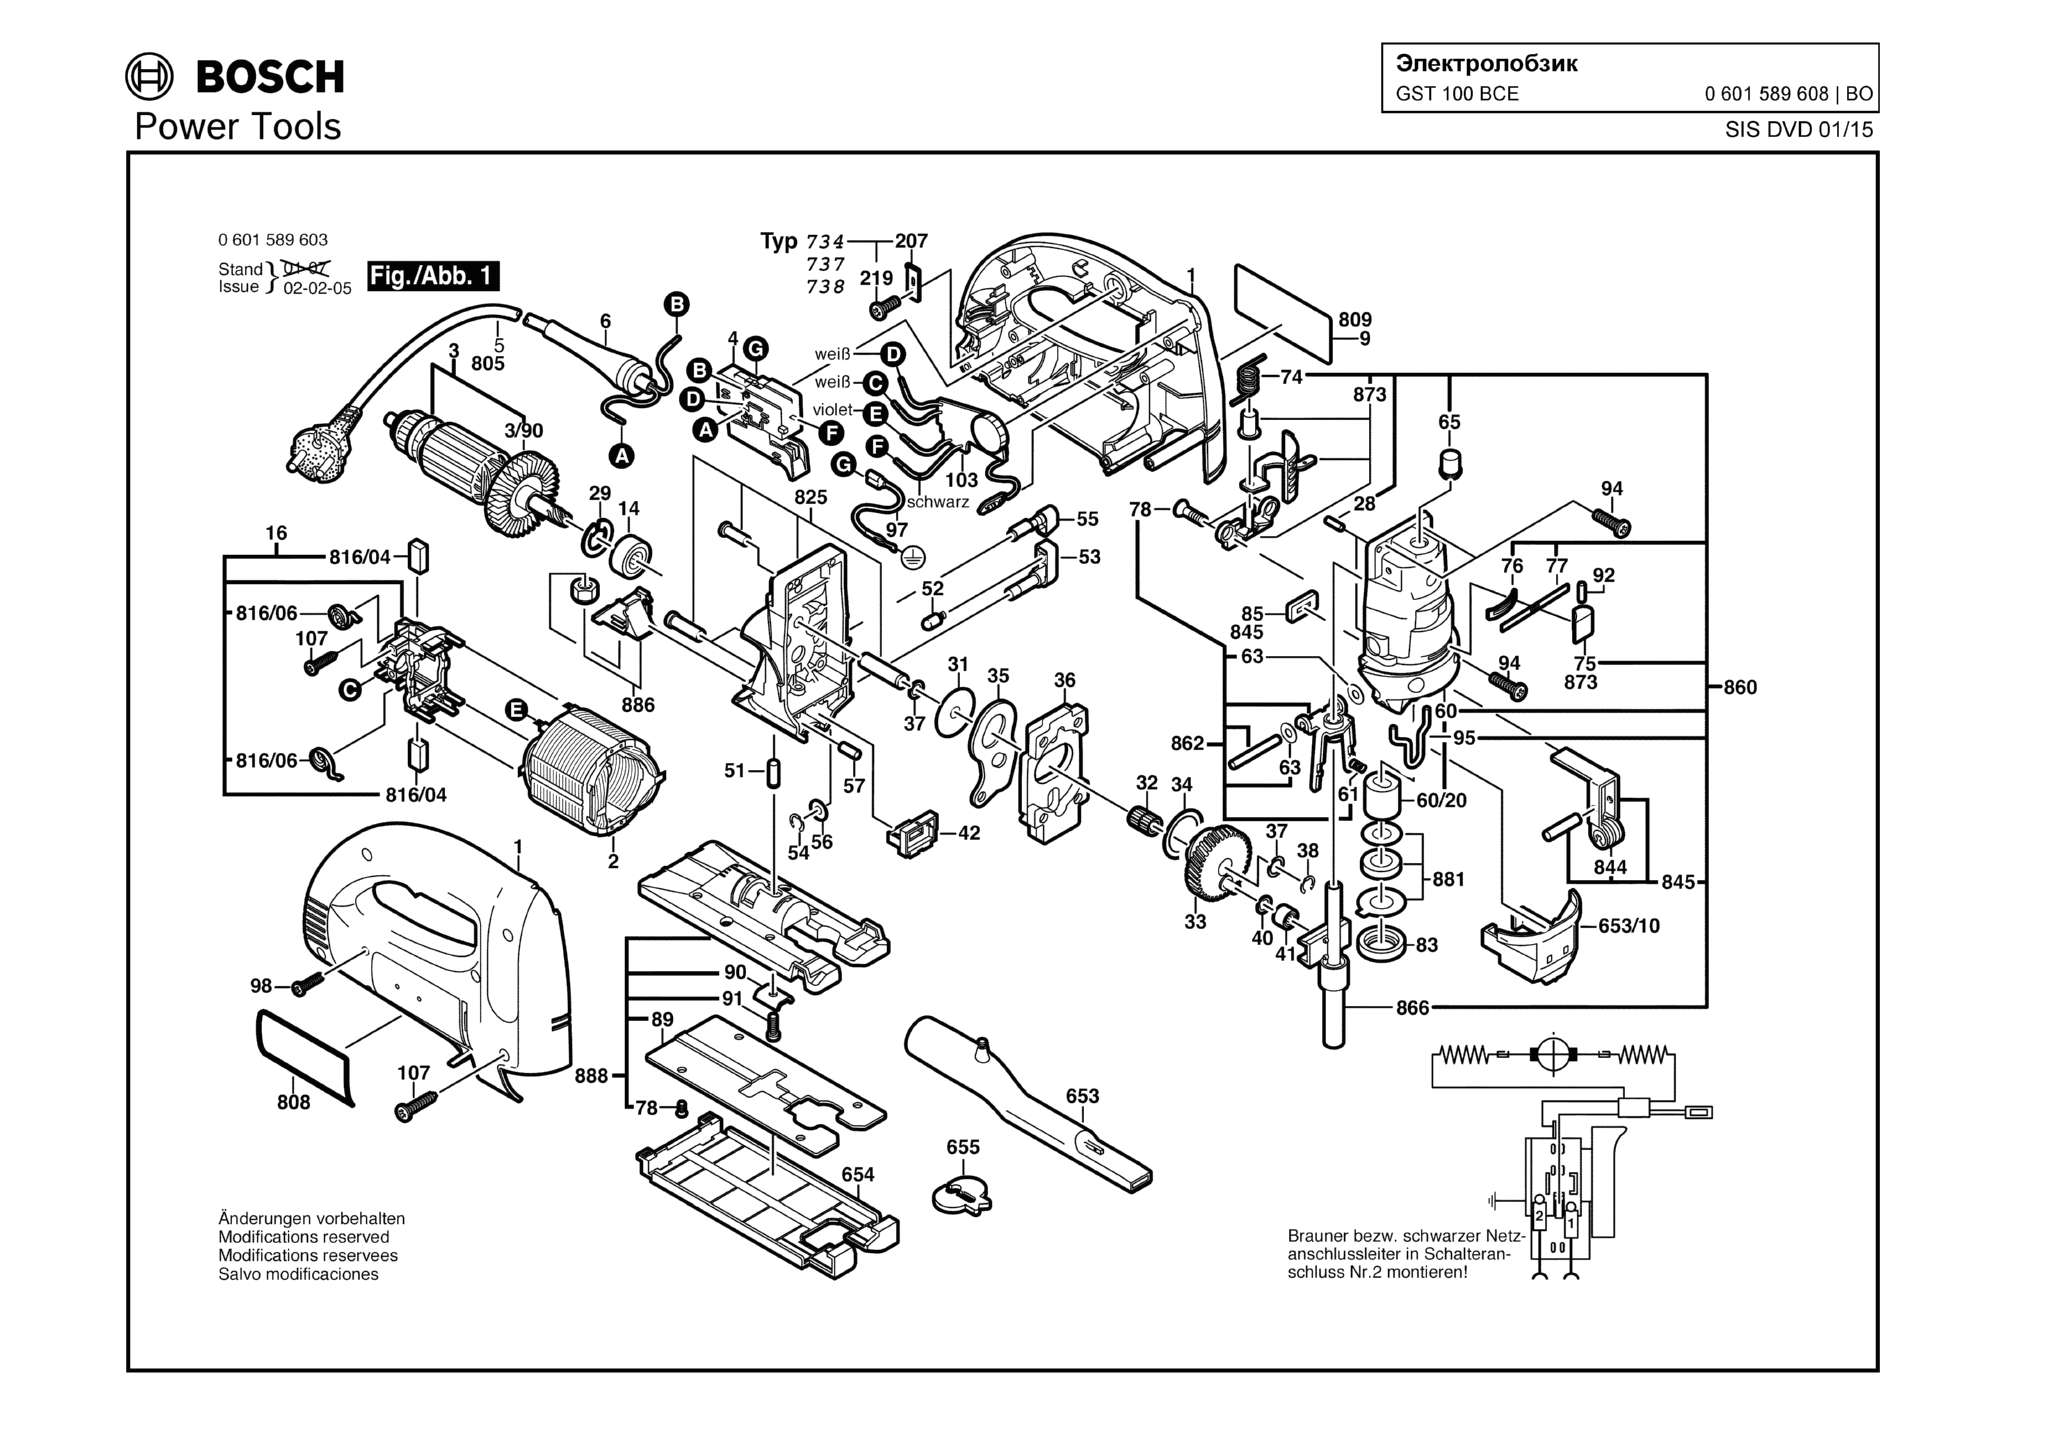 Запчасти, схема и деталировка Bosch GST 100 BCE (ТИП 0601589608)